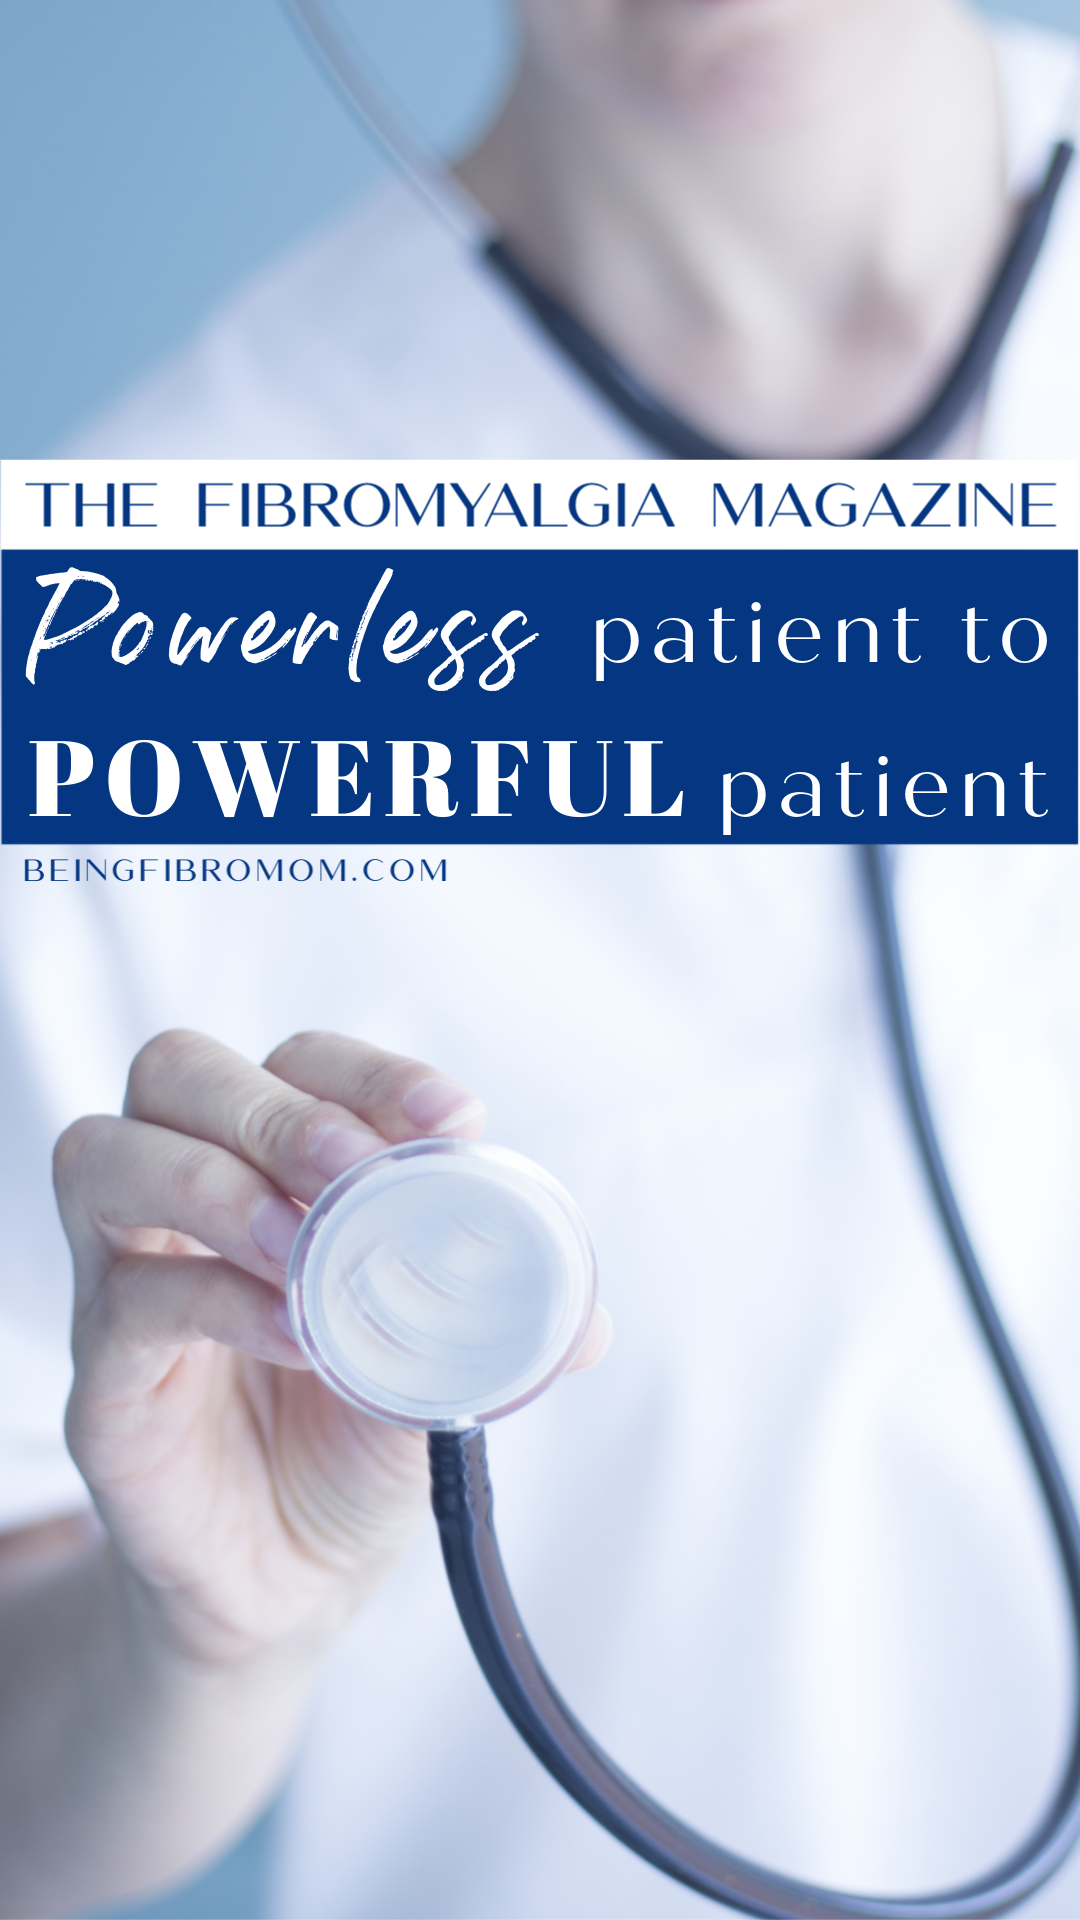 #TheFibromyalgiamagazine Powerless patient into powerful patient #beingfibromom #fibromyalgia